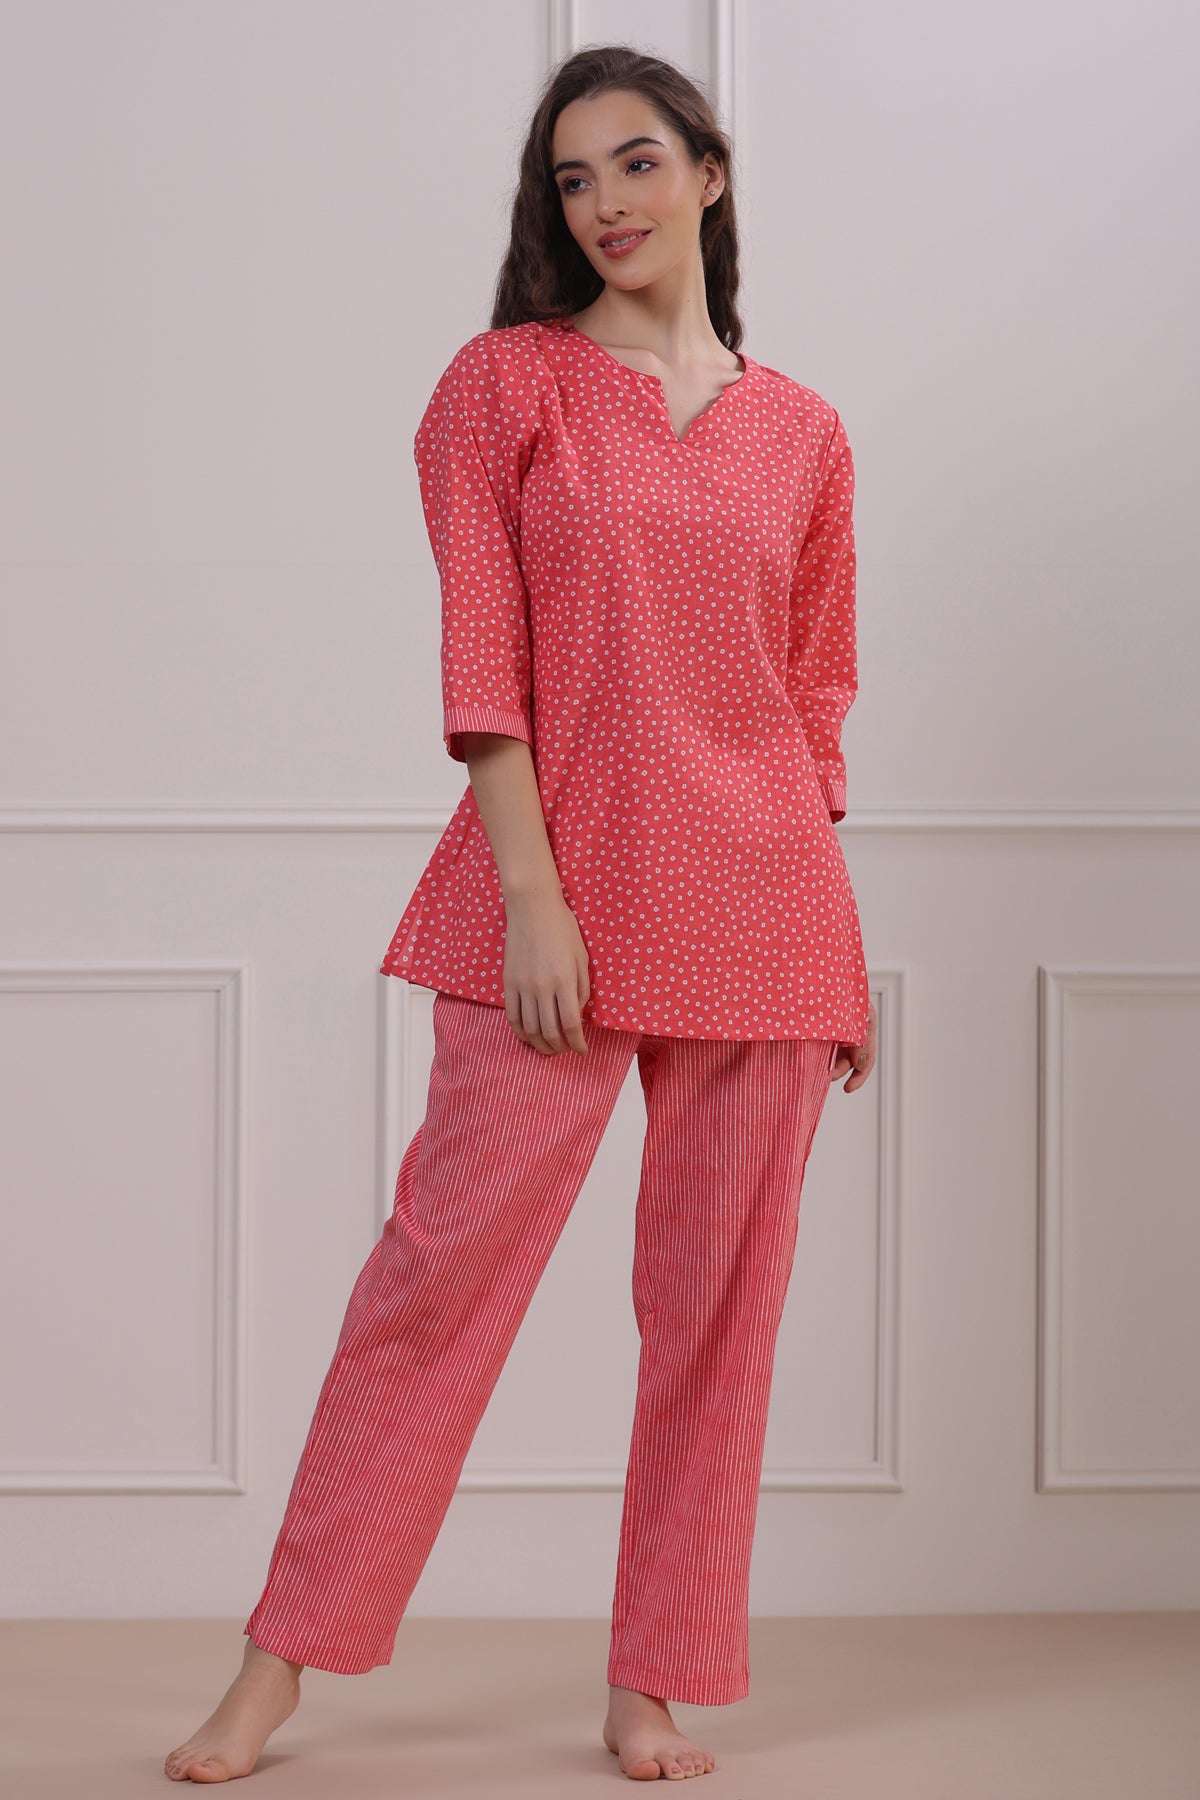 Polka Dots with Stripes on Peach Loungewear